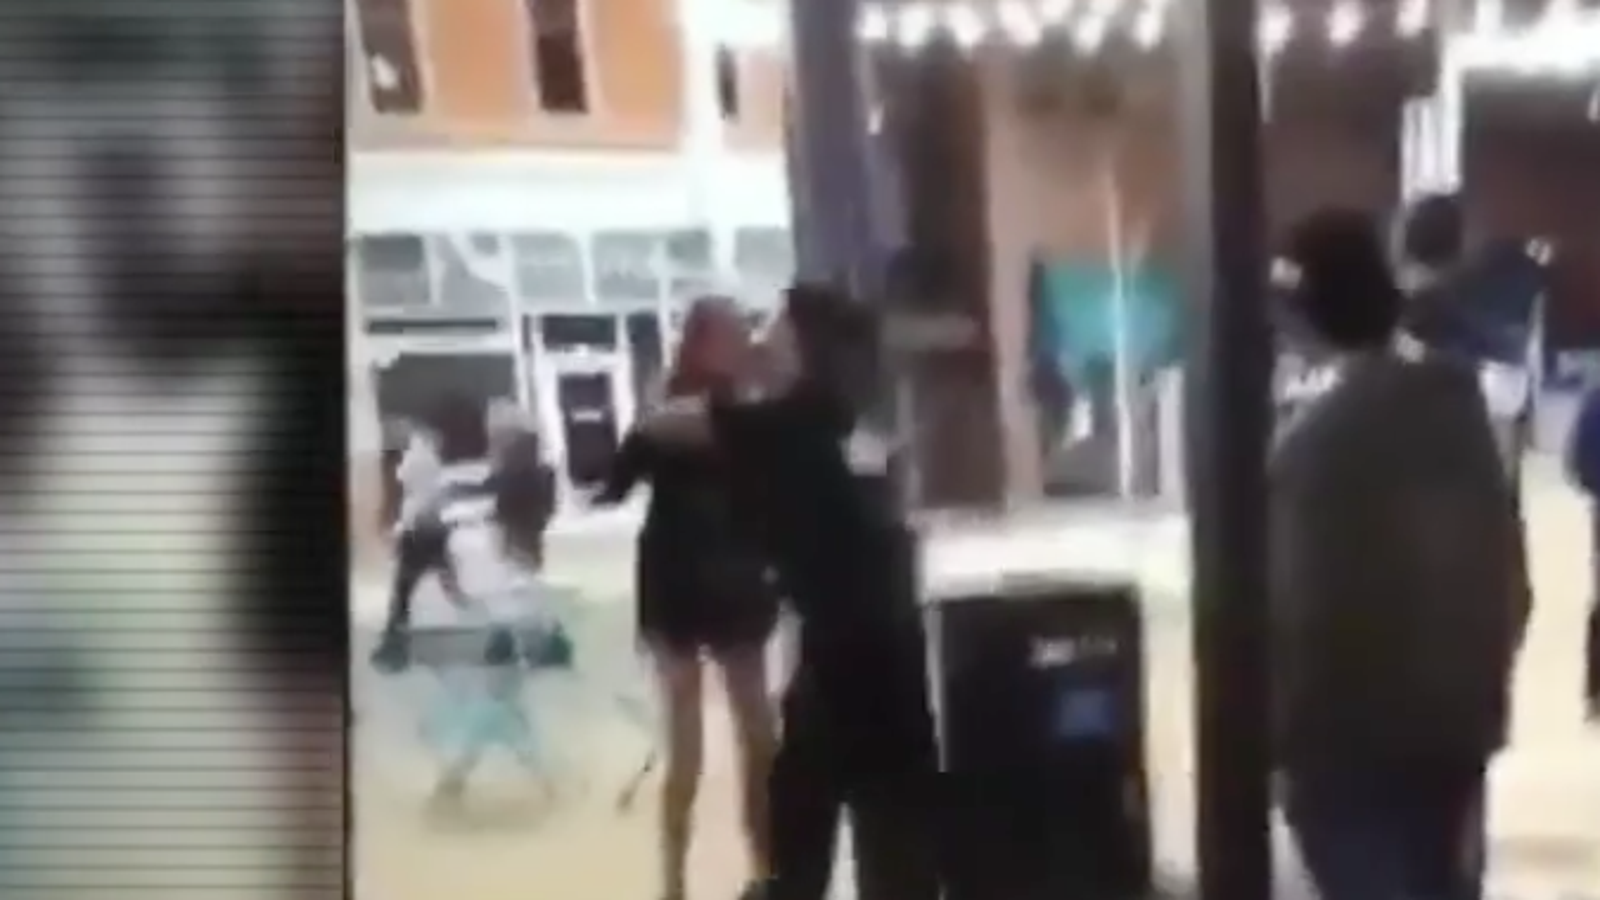 bar bouncer body slams a woman